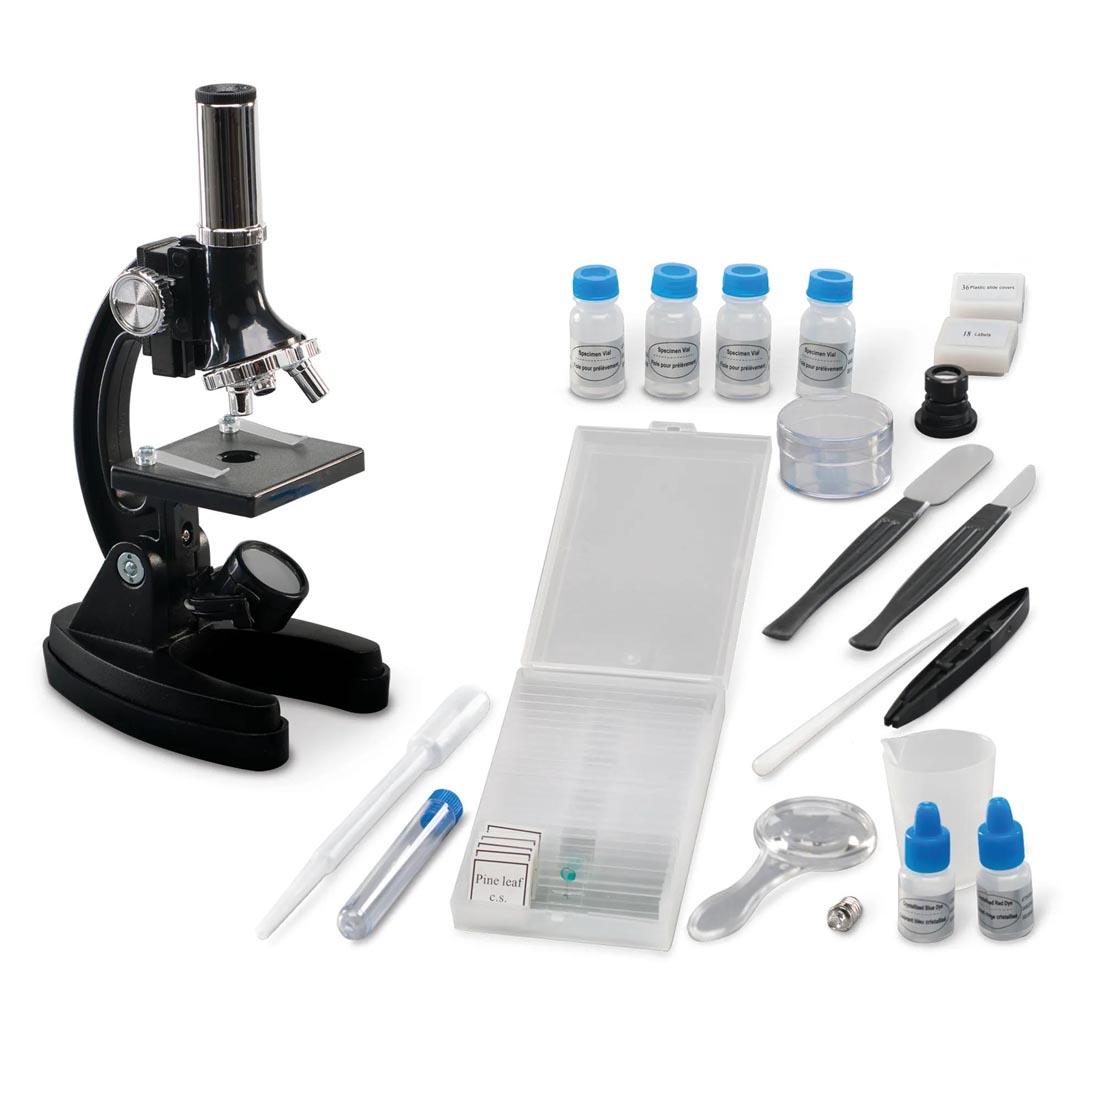 contents of the GeoSafari MicroPro Microscope Set